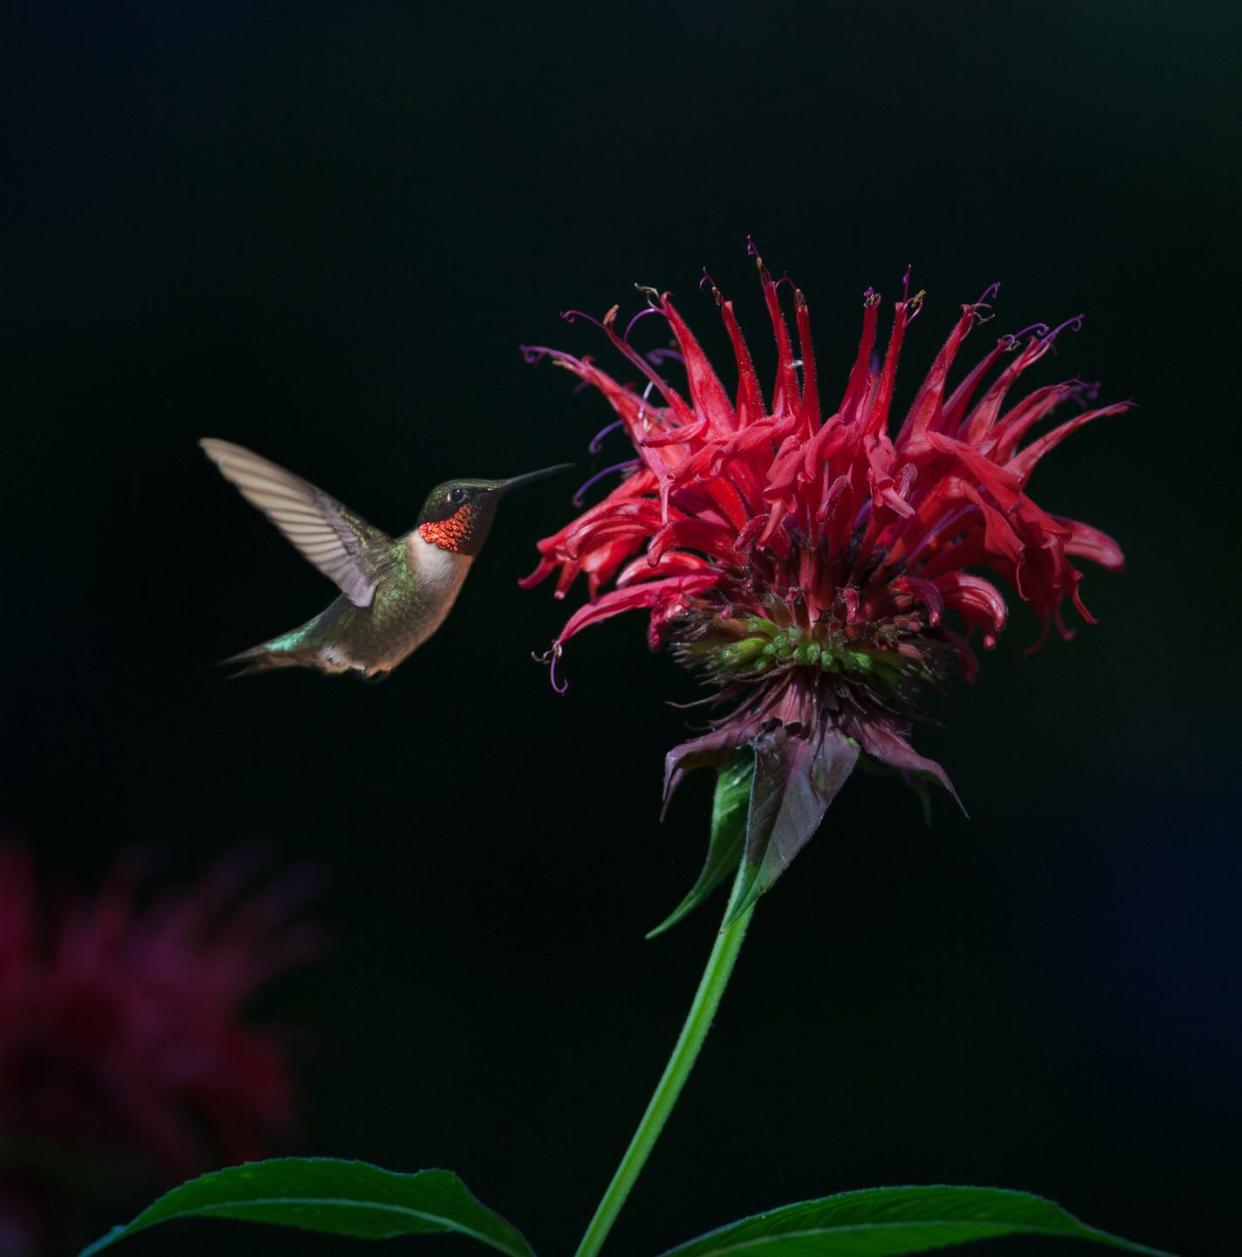 flowers that attract hummingbirds like bee balm